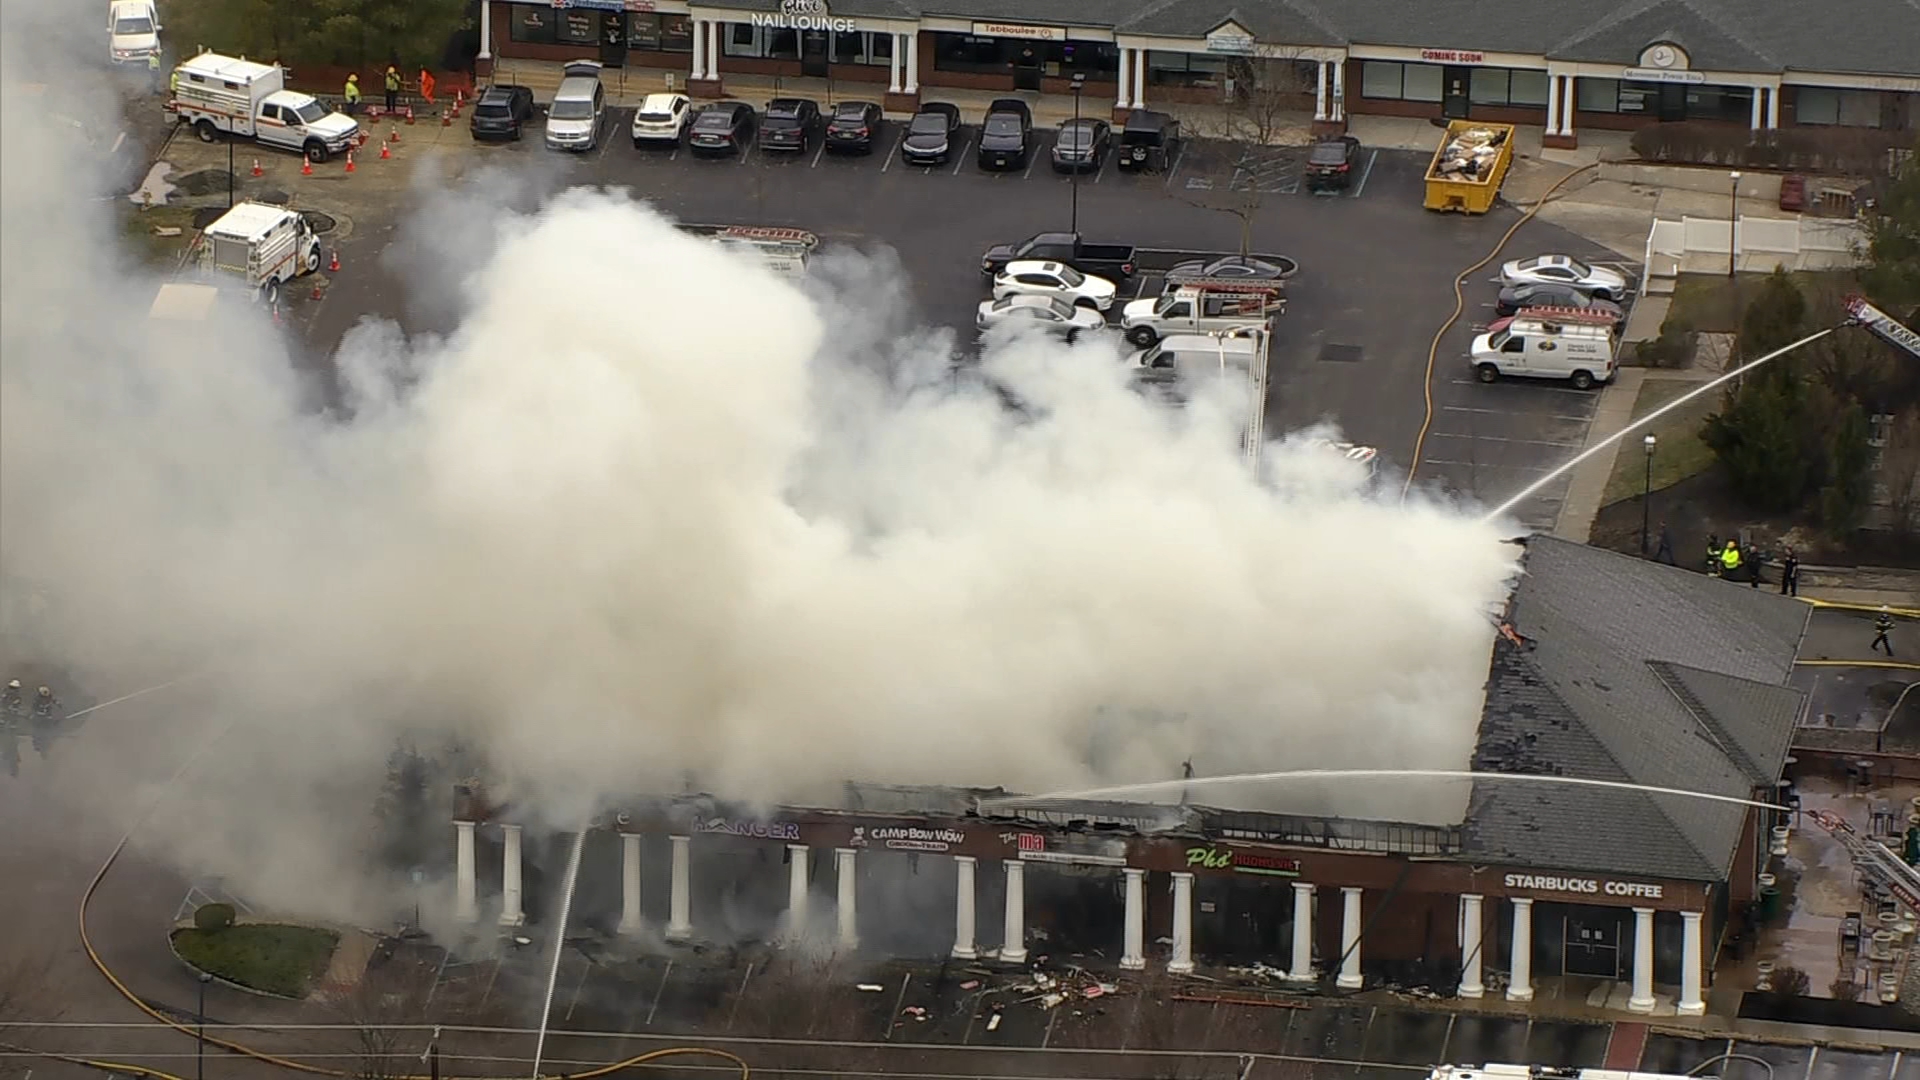 Duct fire evacuates 2 Short Hills mall restaurants, officials say